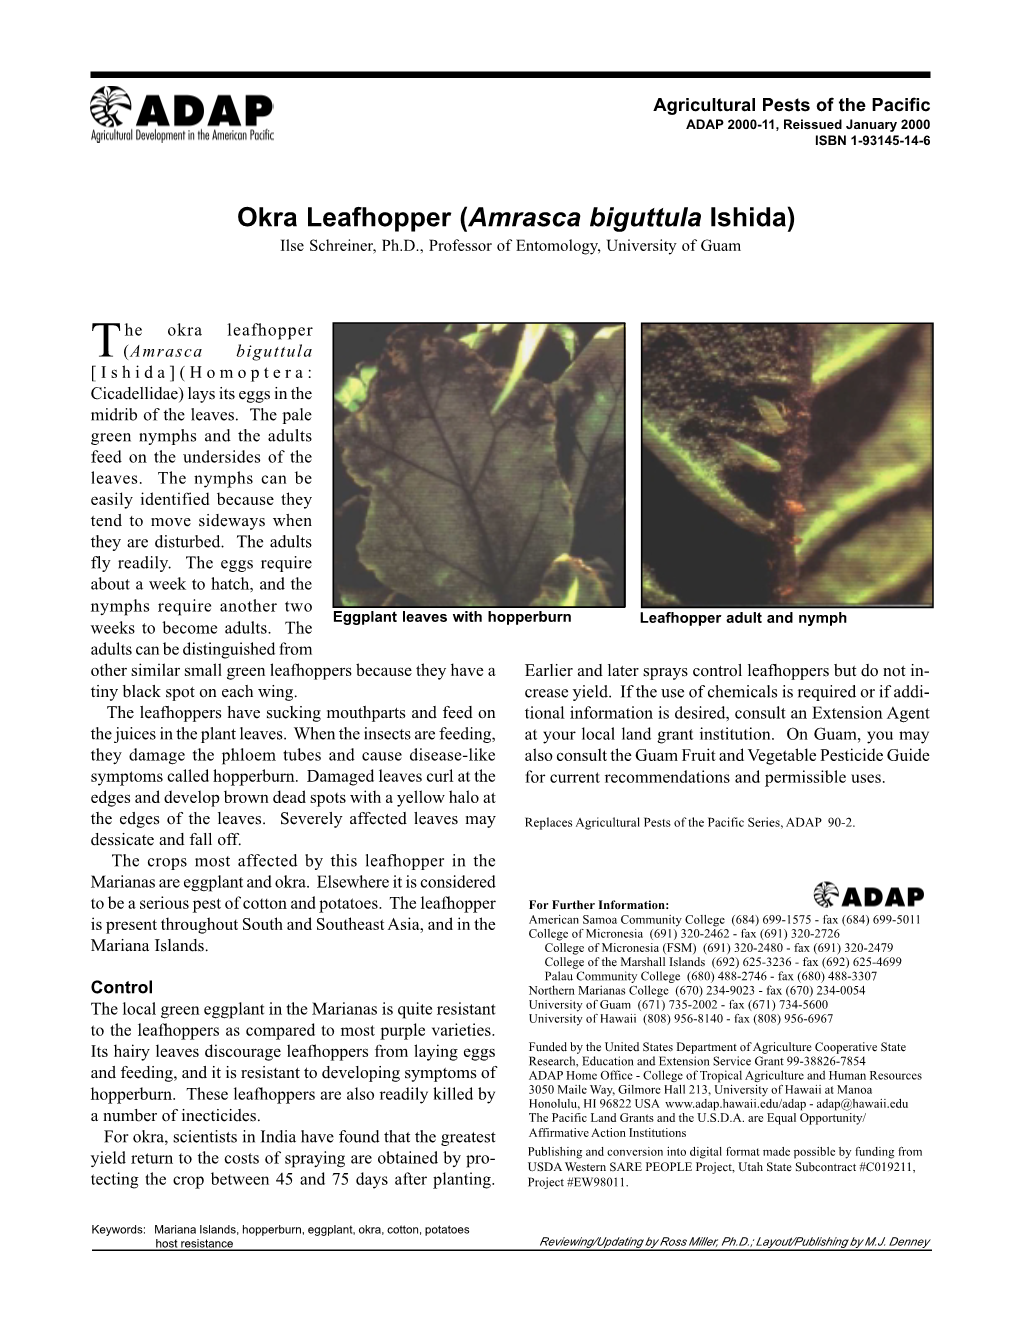 Okra Leafhopper (Amrasca Biguttula Ishida) Ilse Schreiner, Ph.D., Professor of Entomology, University of Guam